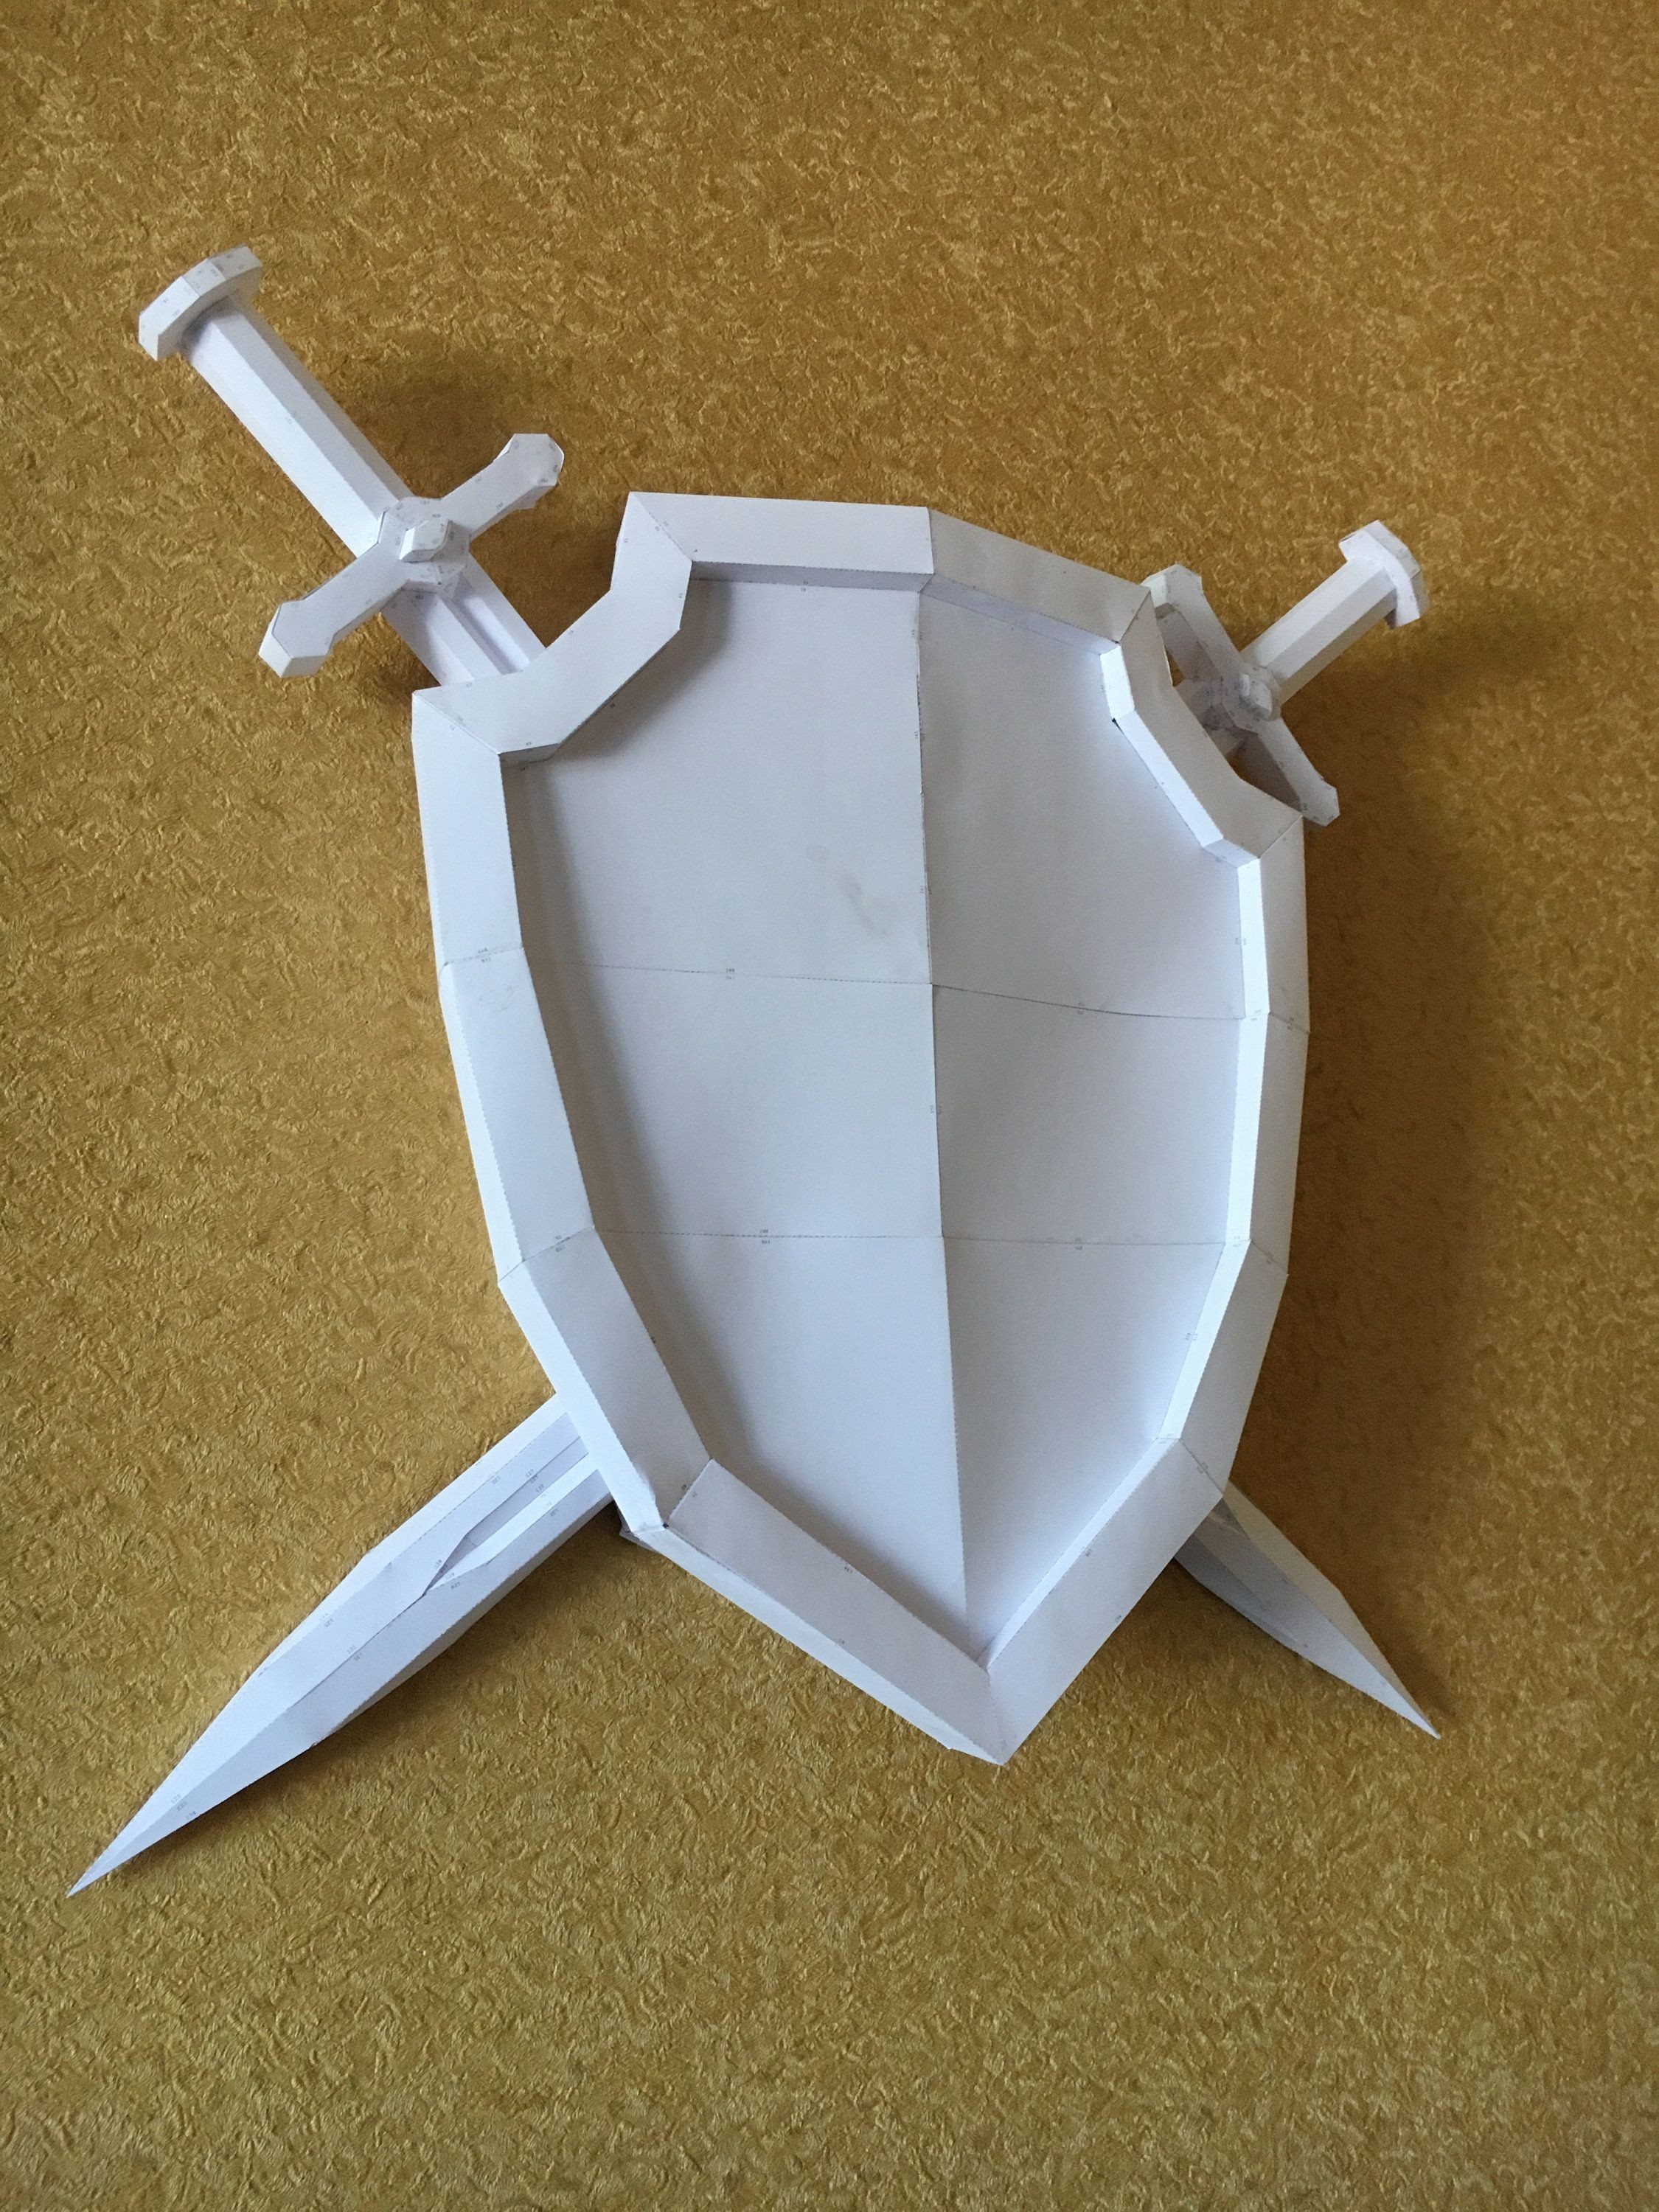 Papercraft Fox Sword Shield Diy Papercraft Model ÐÑÐ¼Ð°Ð¶Ð½ÑÐµ Ð¸Ð·Ð´ÐµÐ Ð¸Ñ